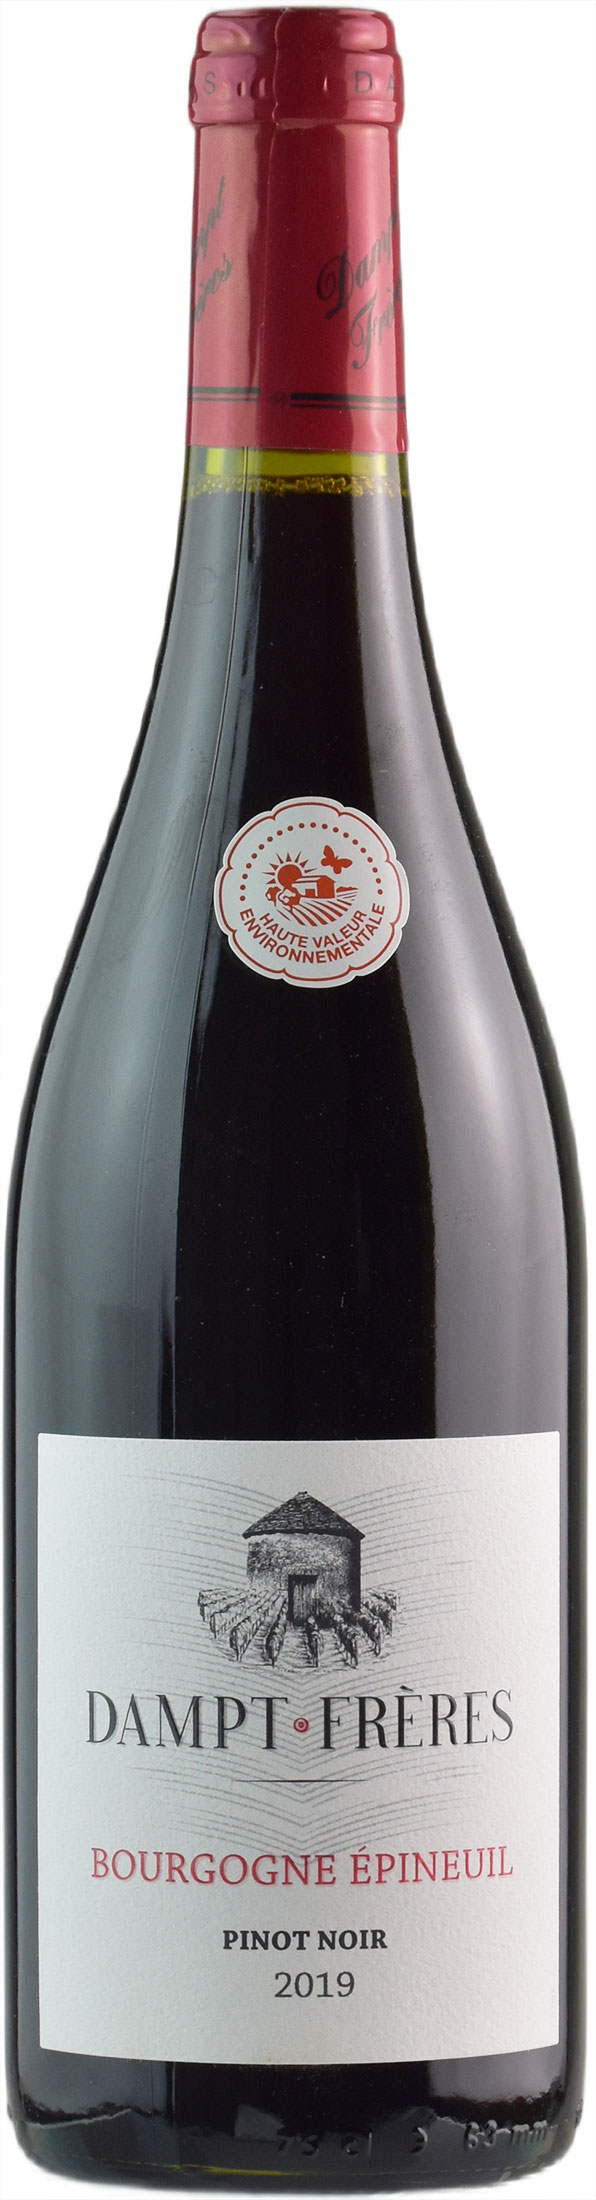 Vignoble Dampt Bourgogne Epineuil Pinot Noir